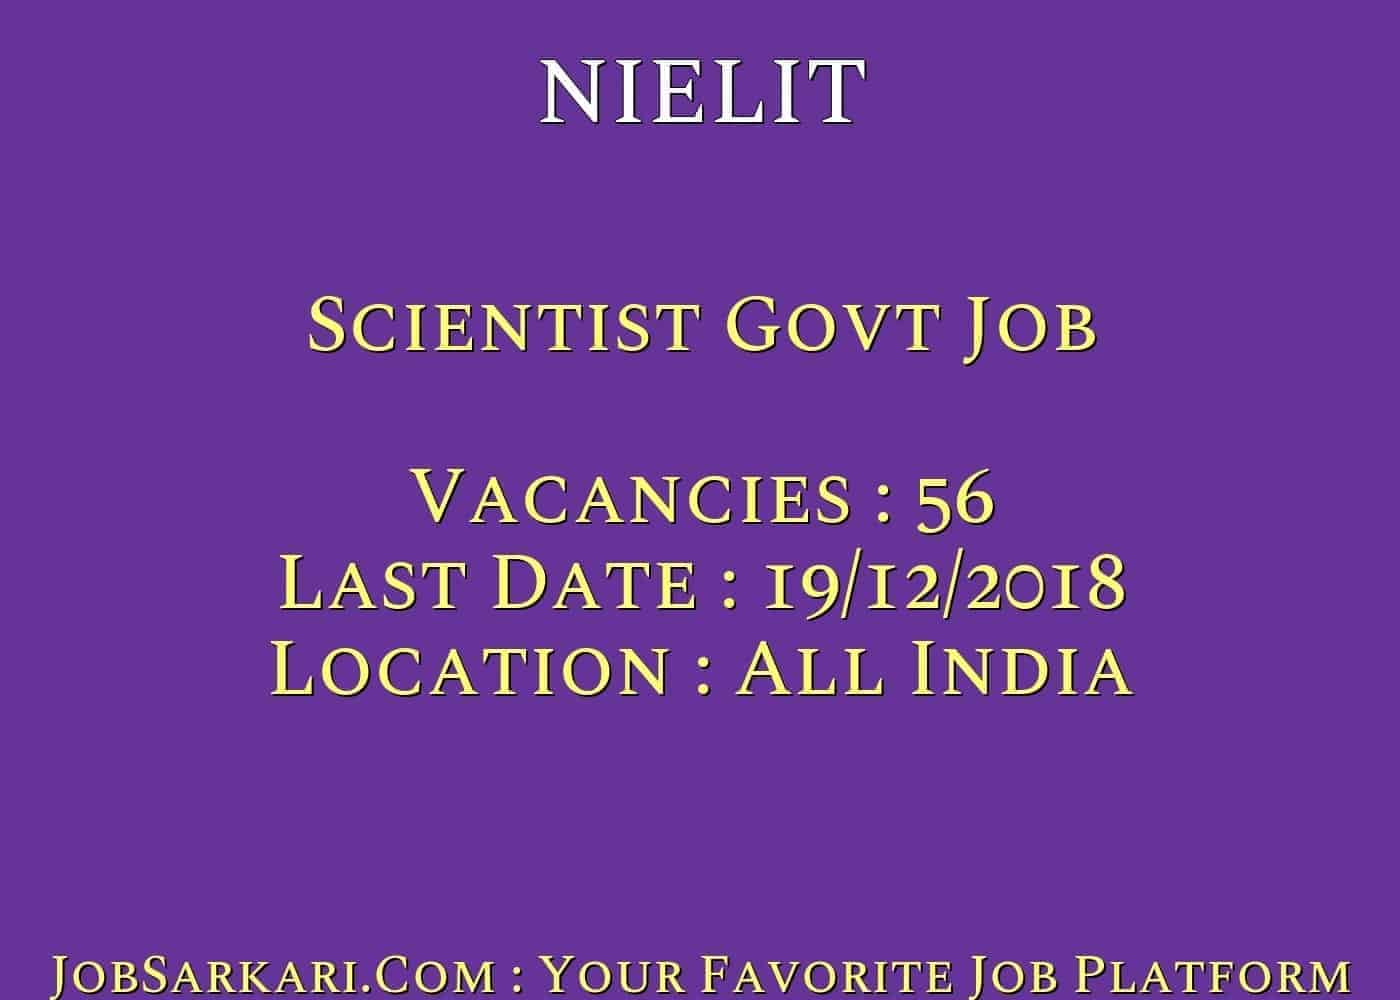 NIELIT Recruitment 2018 for Scientist Govt Job